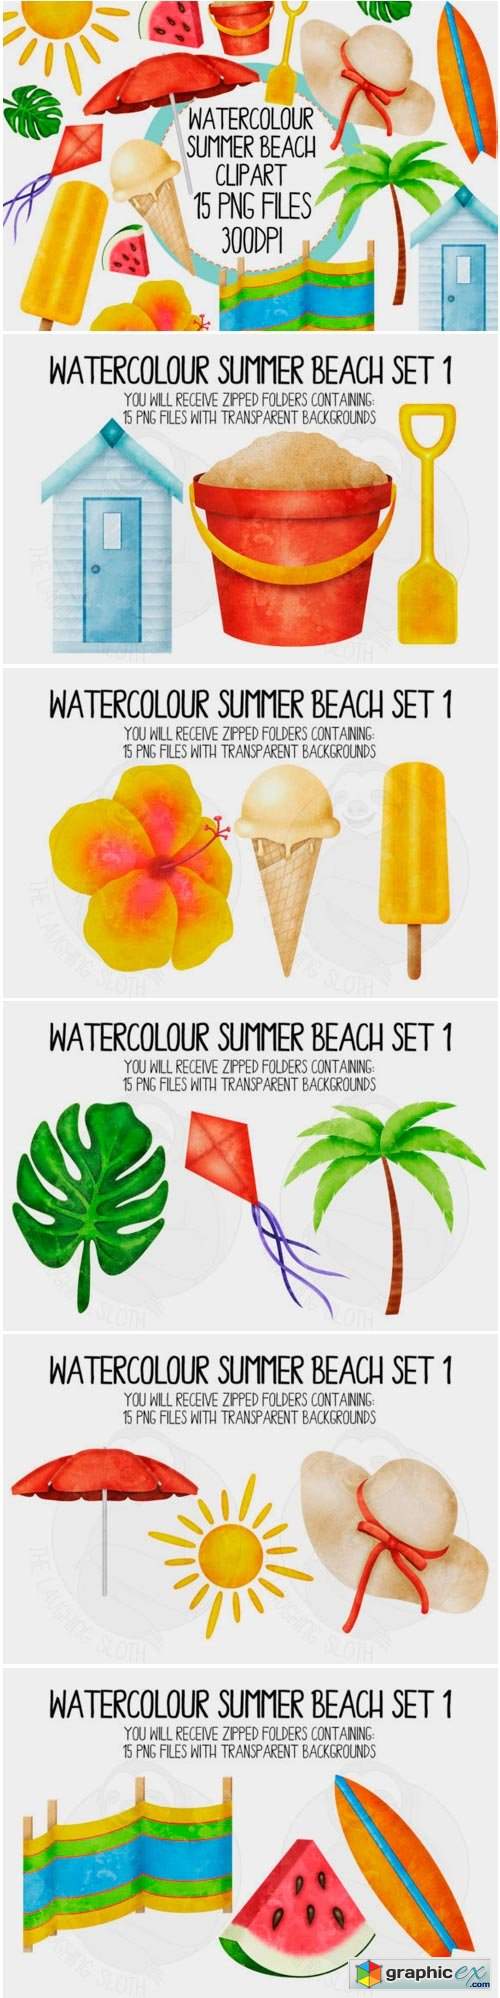 Watercolour Summer Beach Set 1